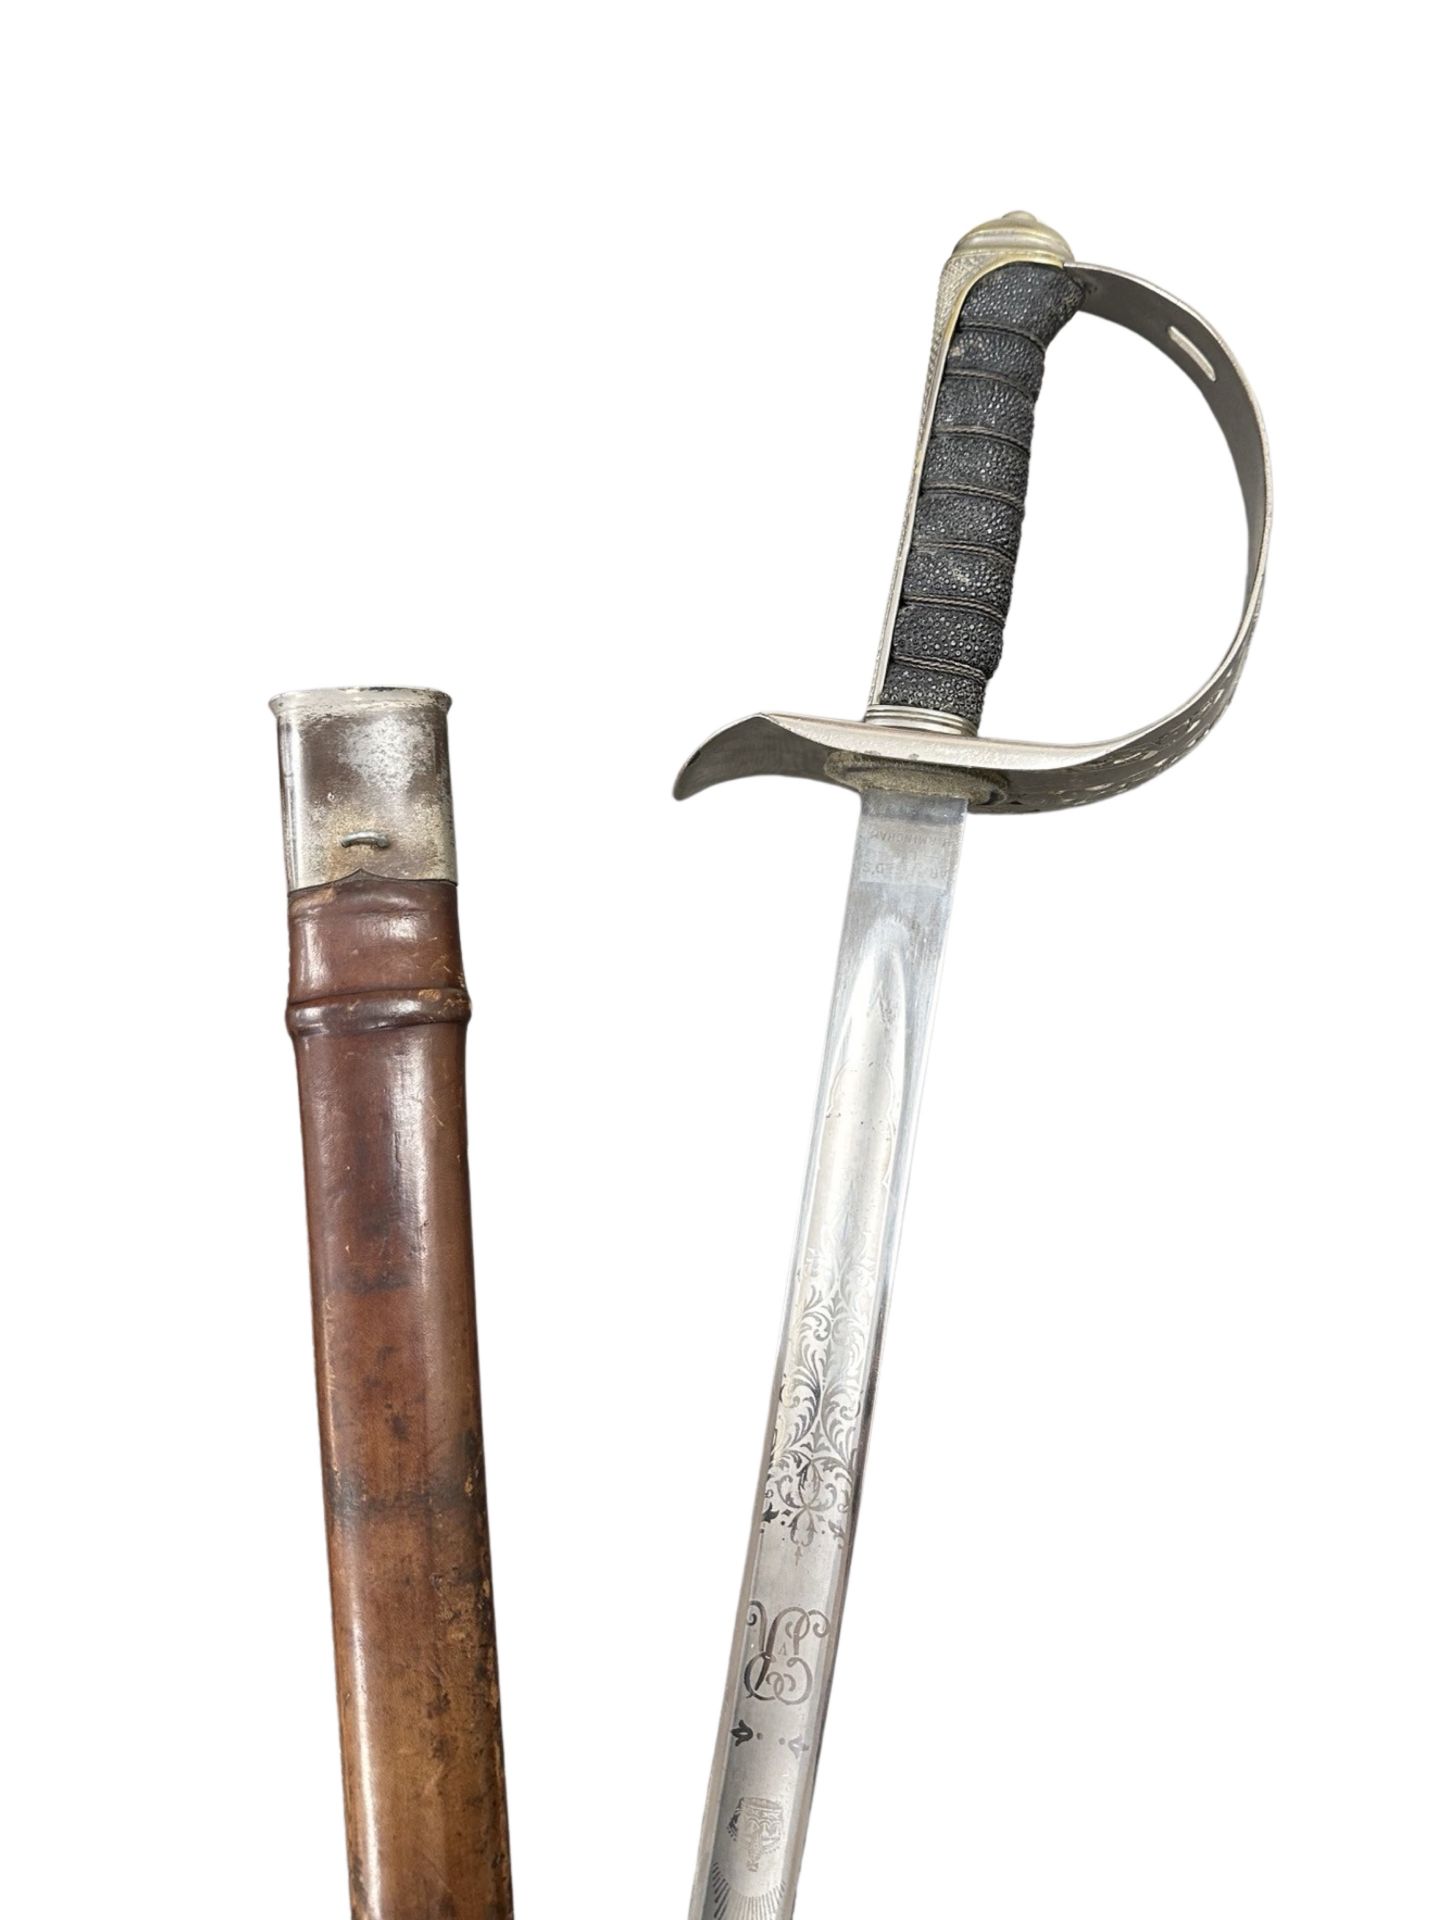 A George V 1897 pattern infantry officer's sword by Armfields Ltd, Birmingham,